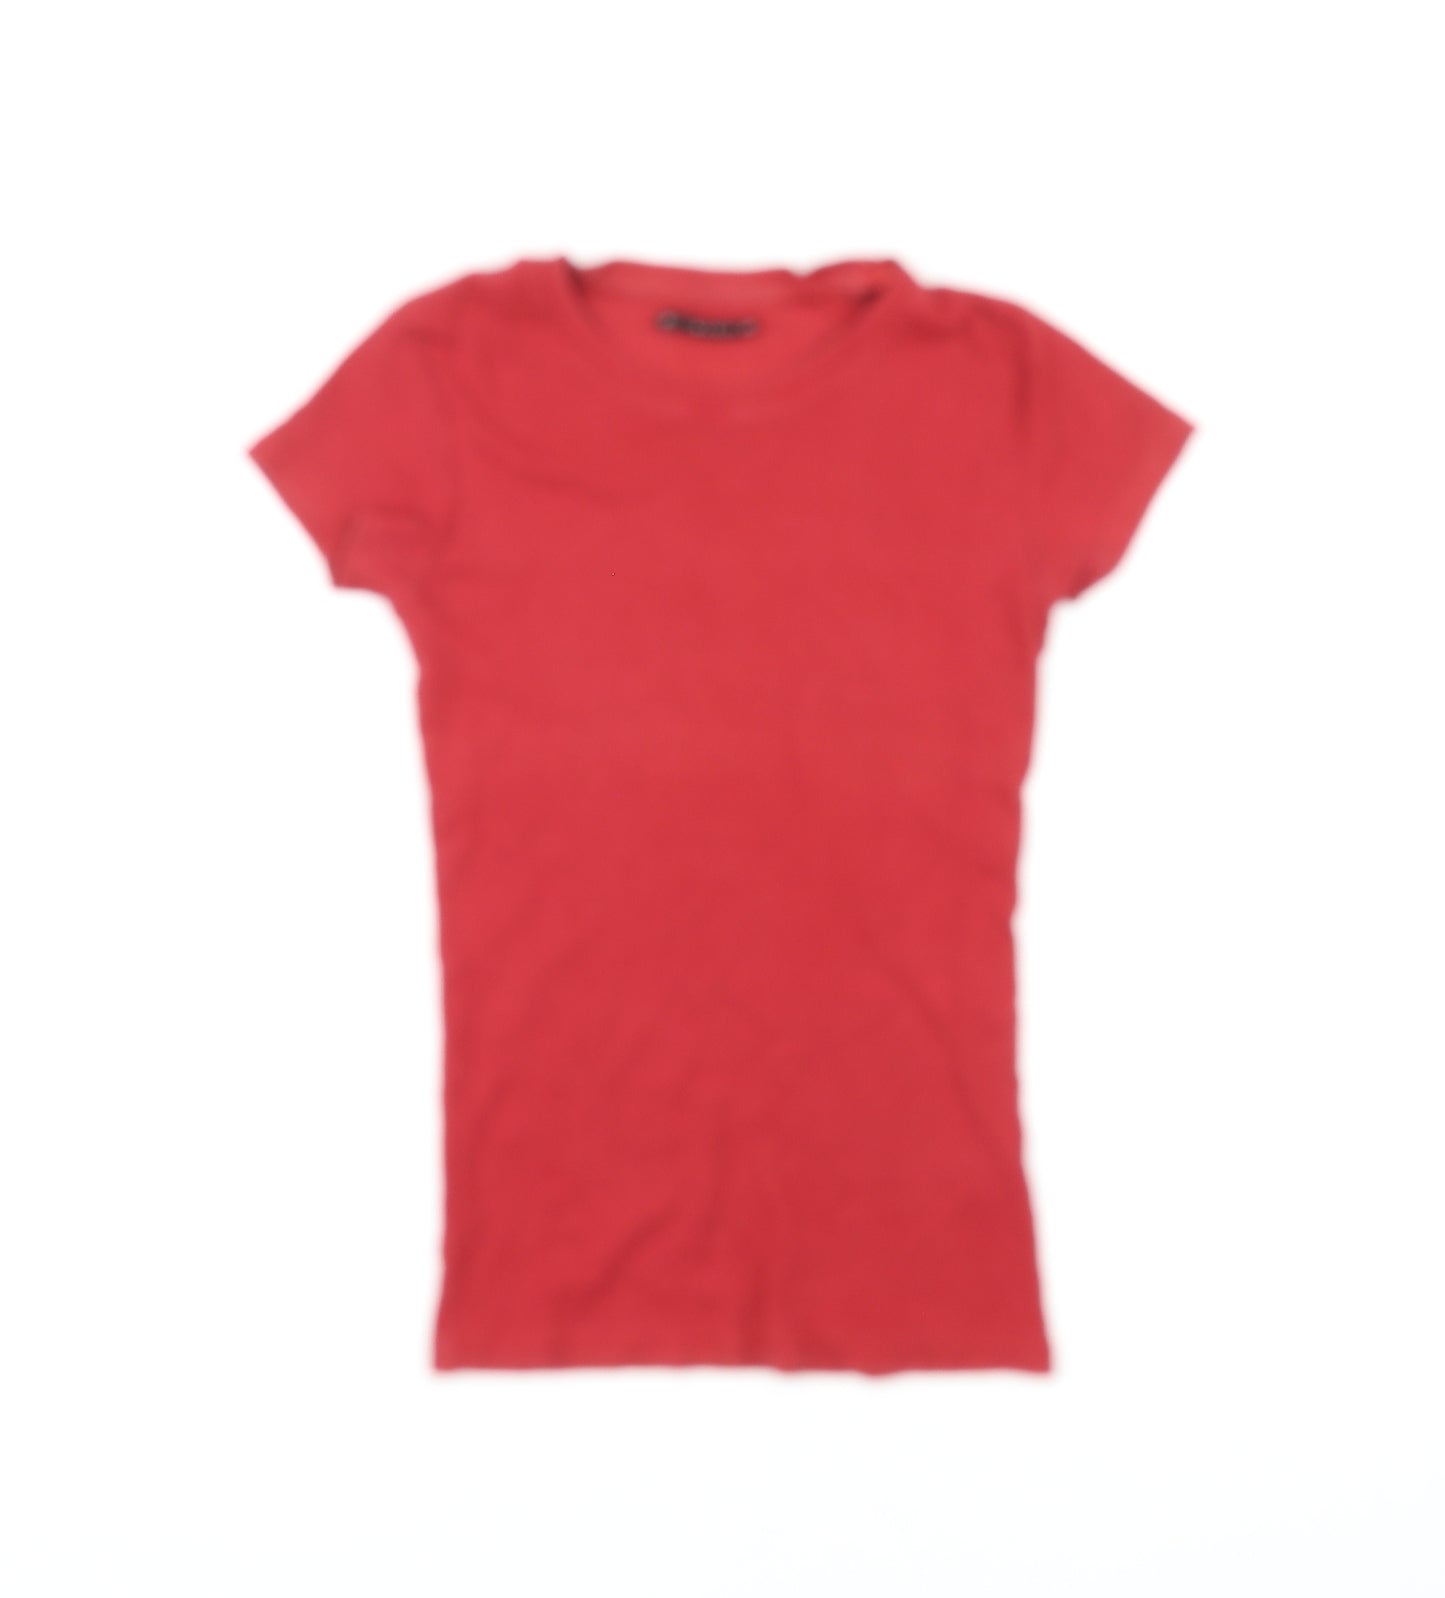 Zuiki Womens Red Cotton Basic T-Shirt Size XS Round Neck